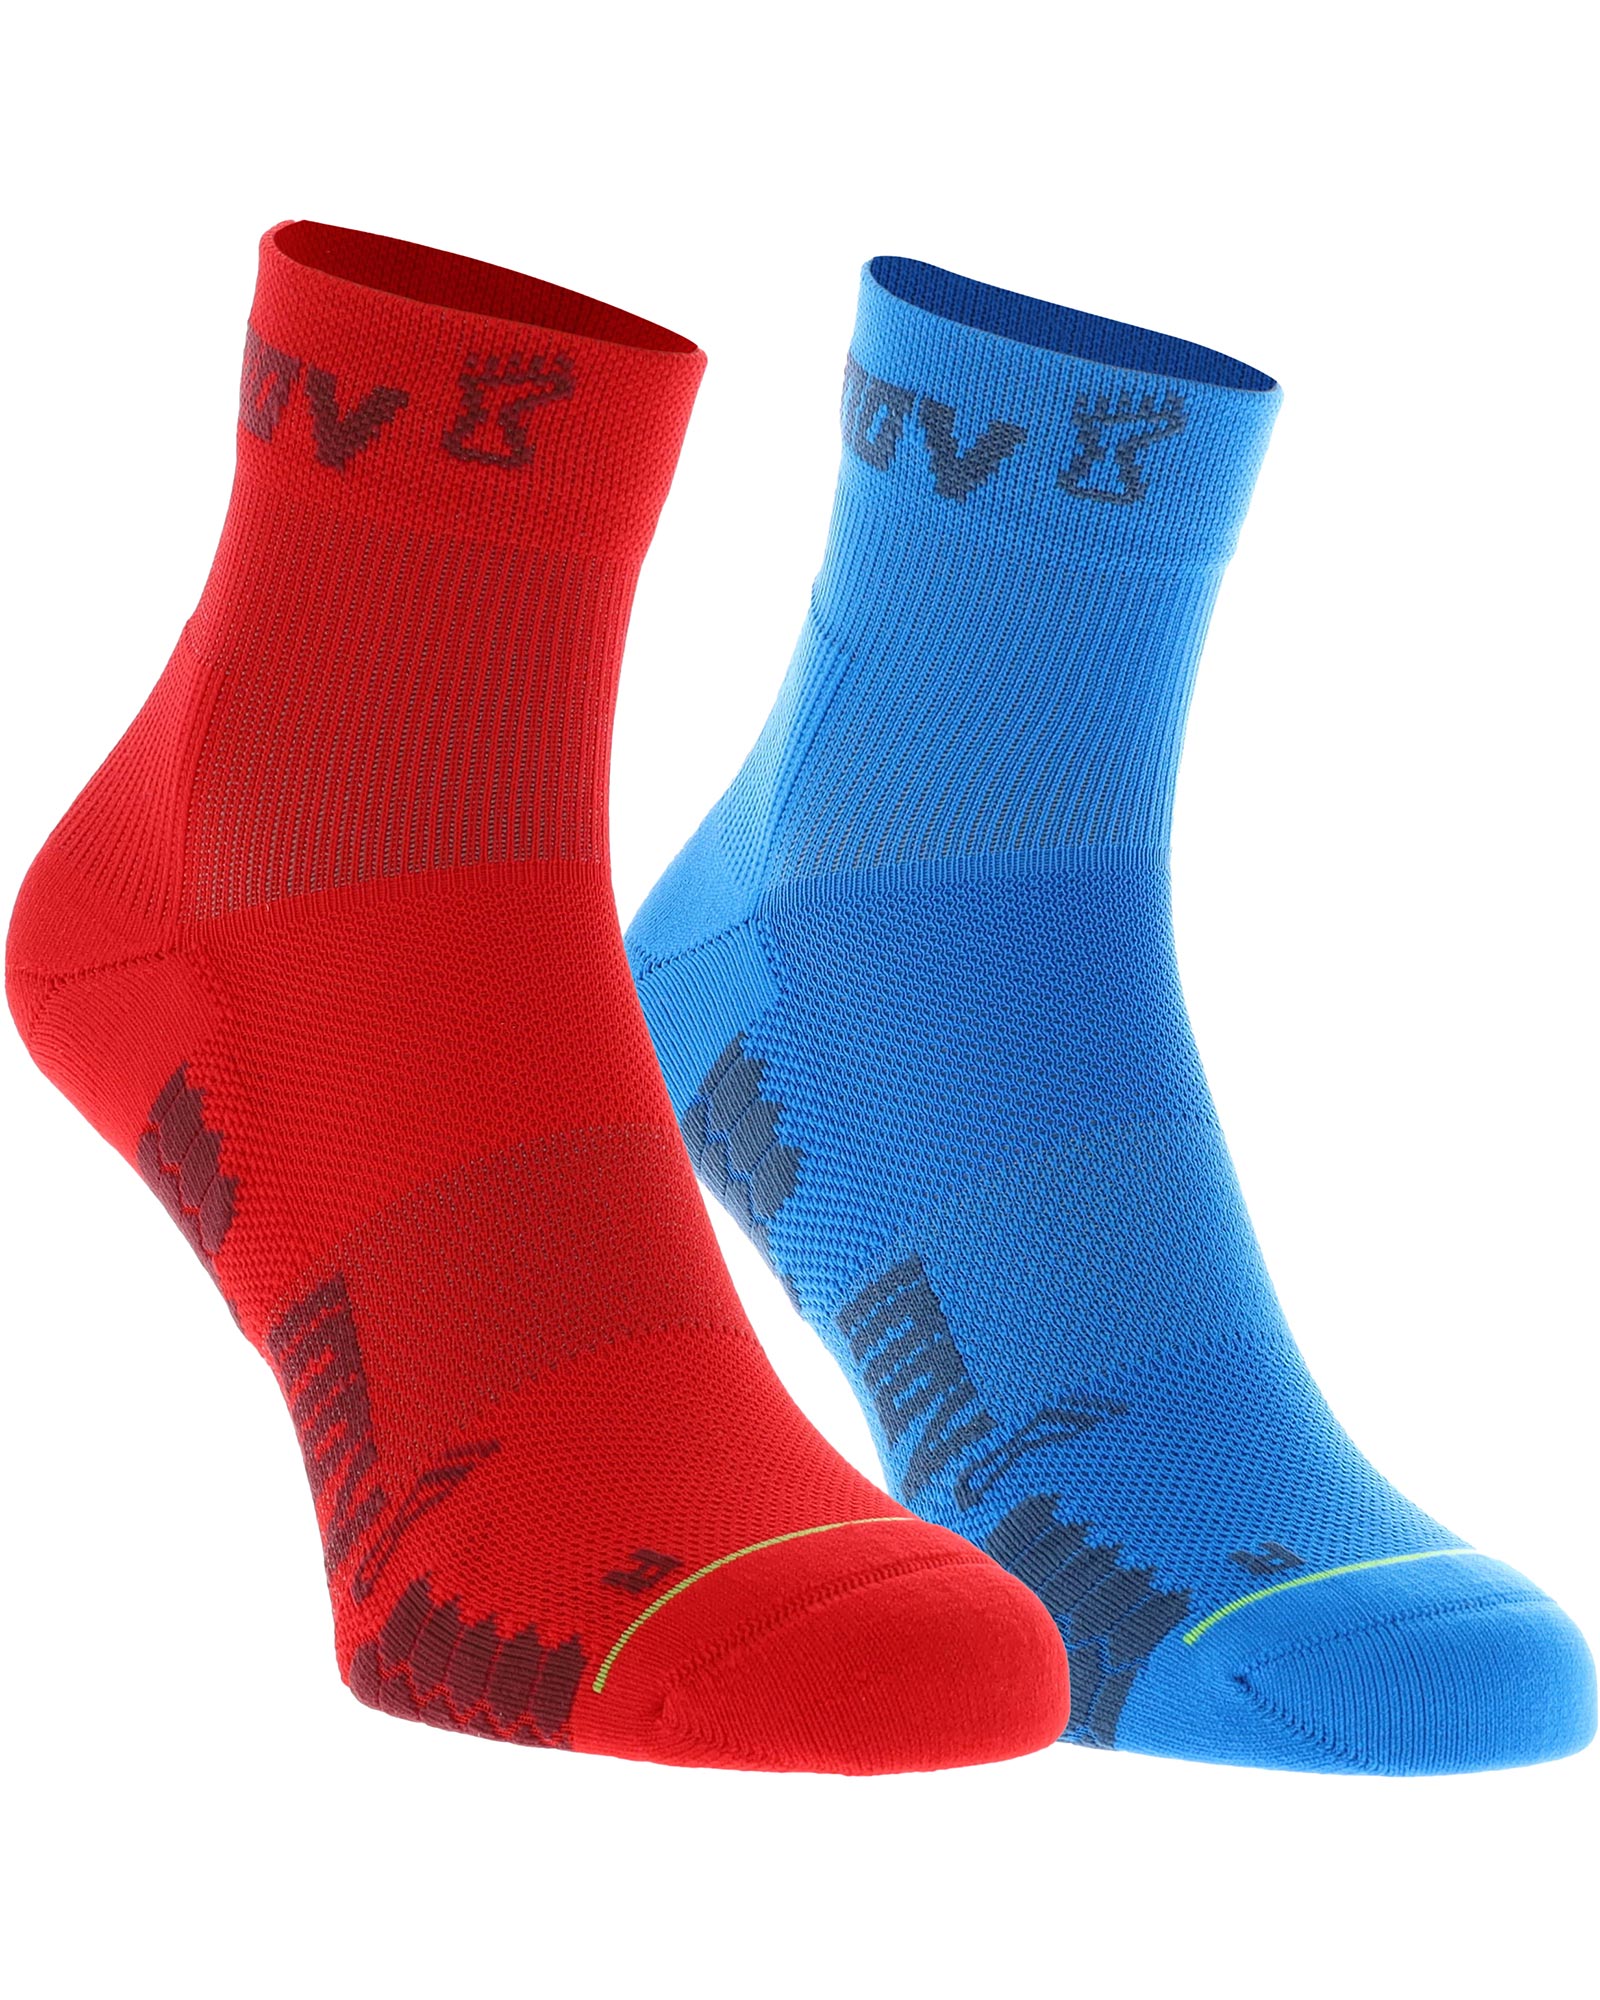 Inov 8 Trailfly Mid Socks - Blue/Red L